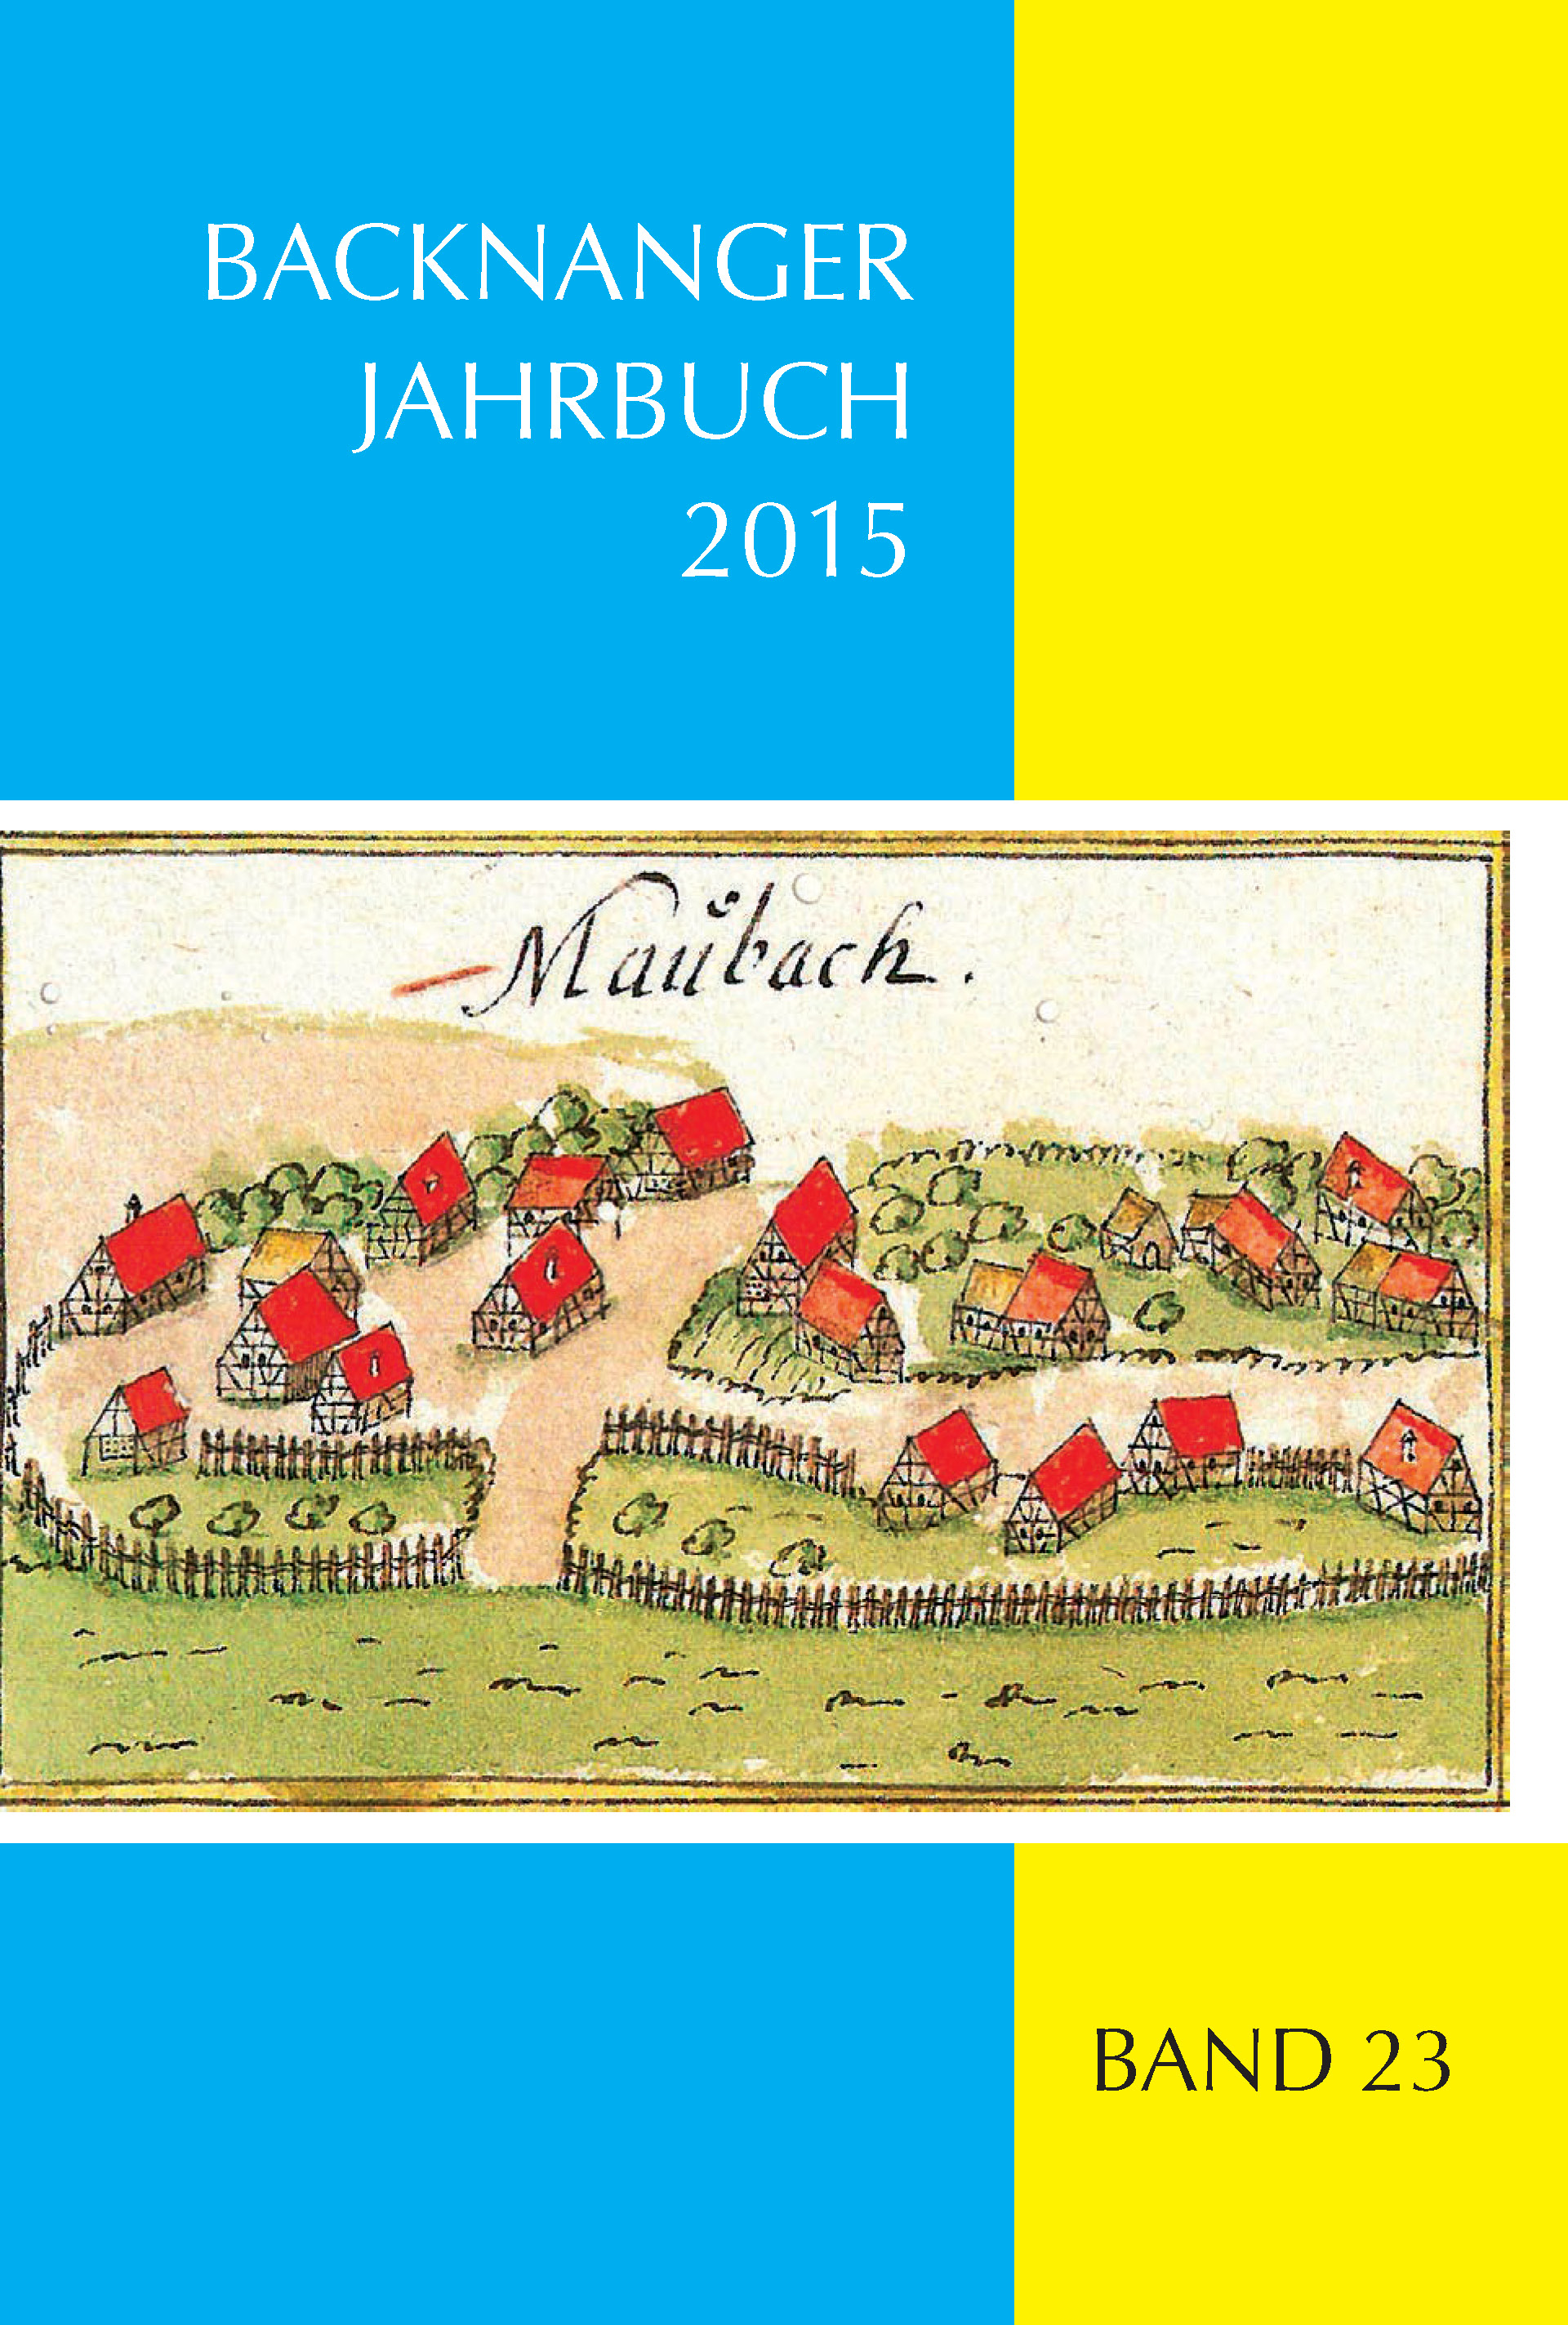                     Ansehen Bd. 23 (2015): Backnanger Jahrbuch
                